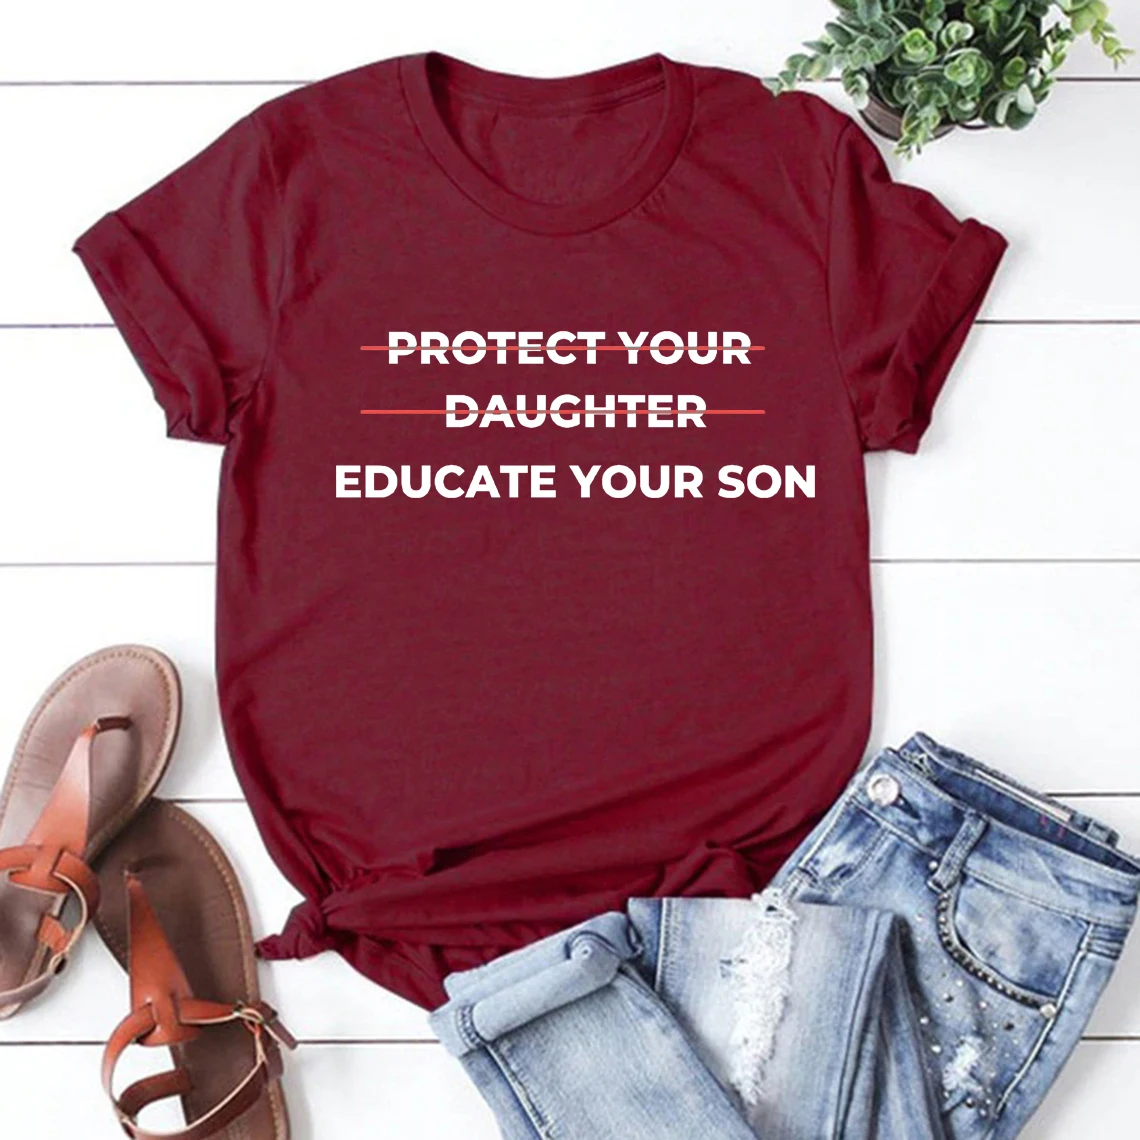 Feminist Shirt,Educate Your Son,Women Empowerment,Too Many Women,Human Rights shirt,Ruth Bader Ginsburg,Girl Power,feminism Resistance Shirt